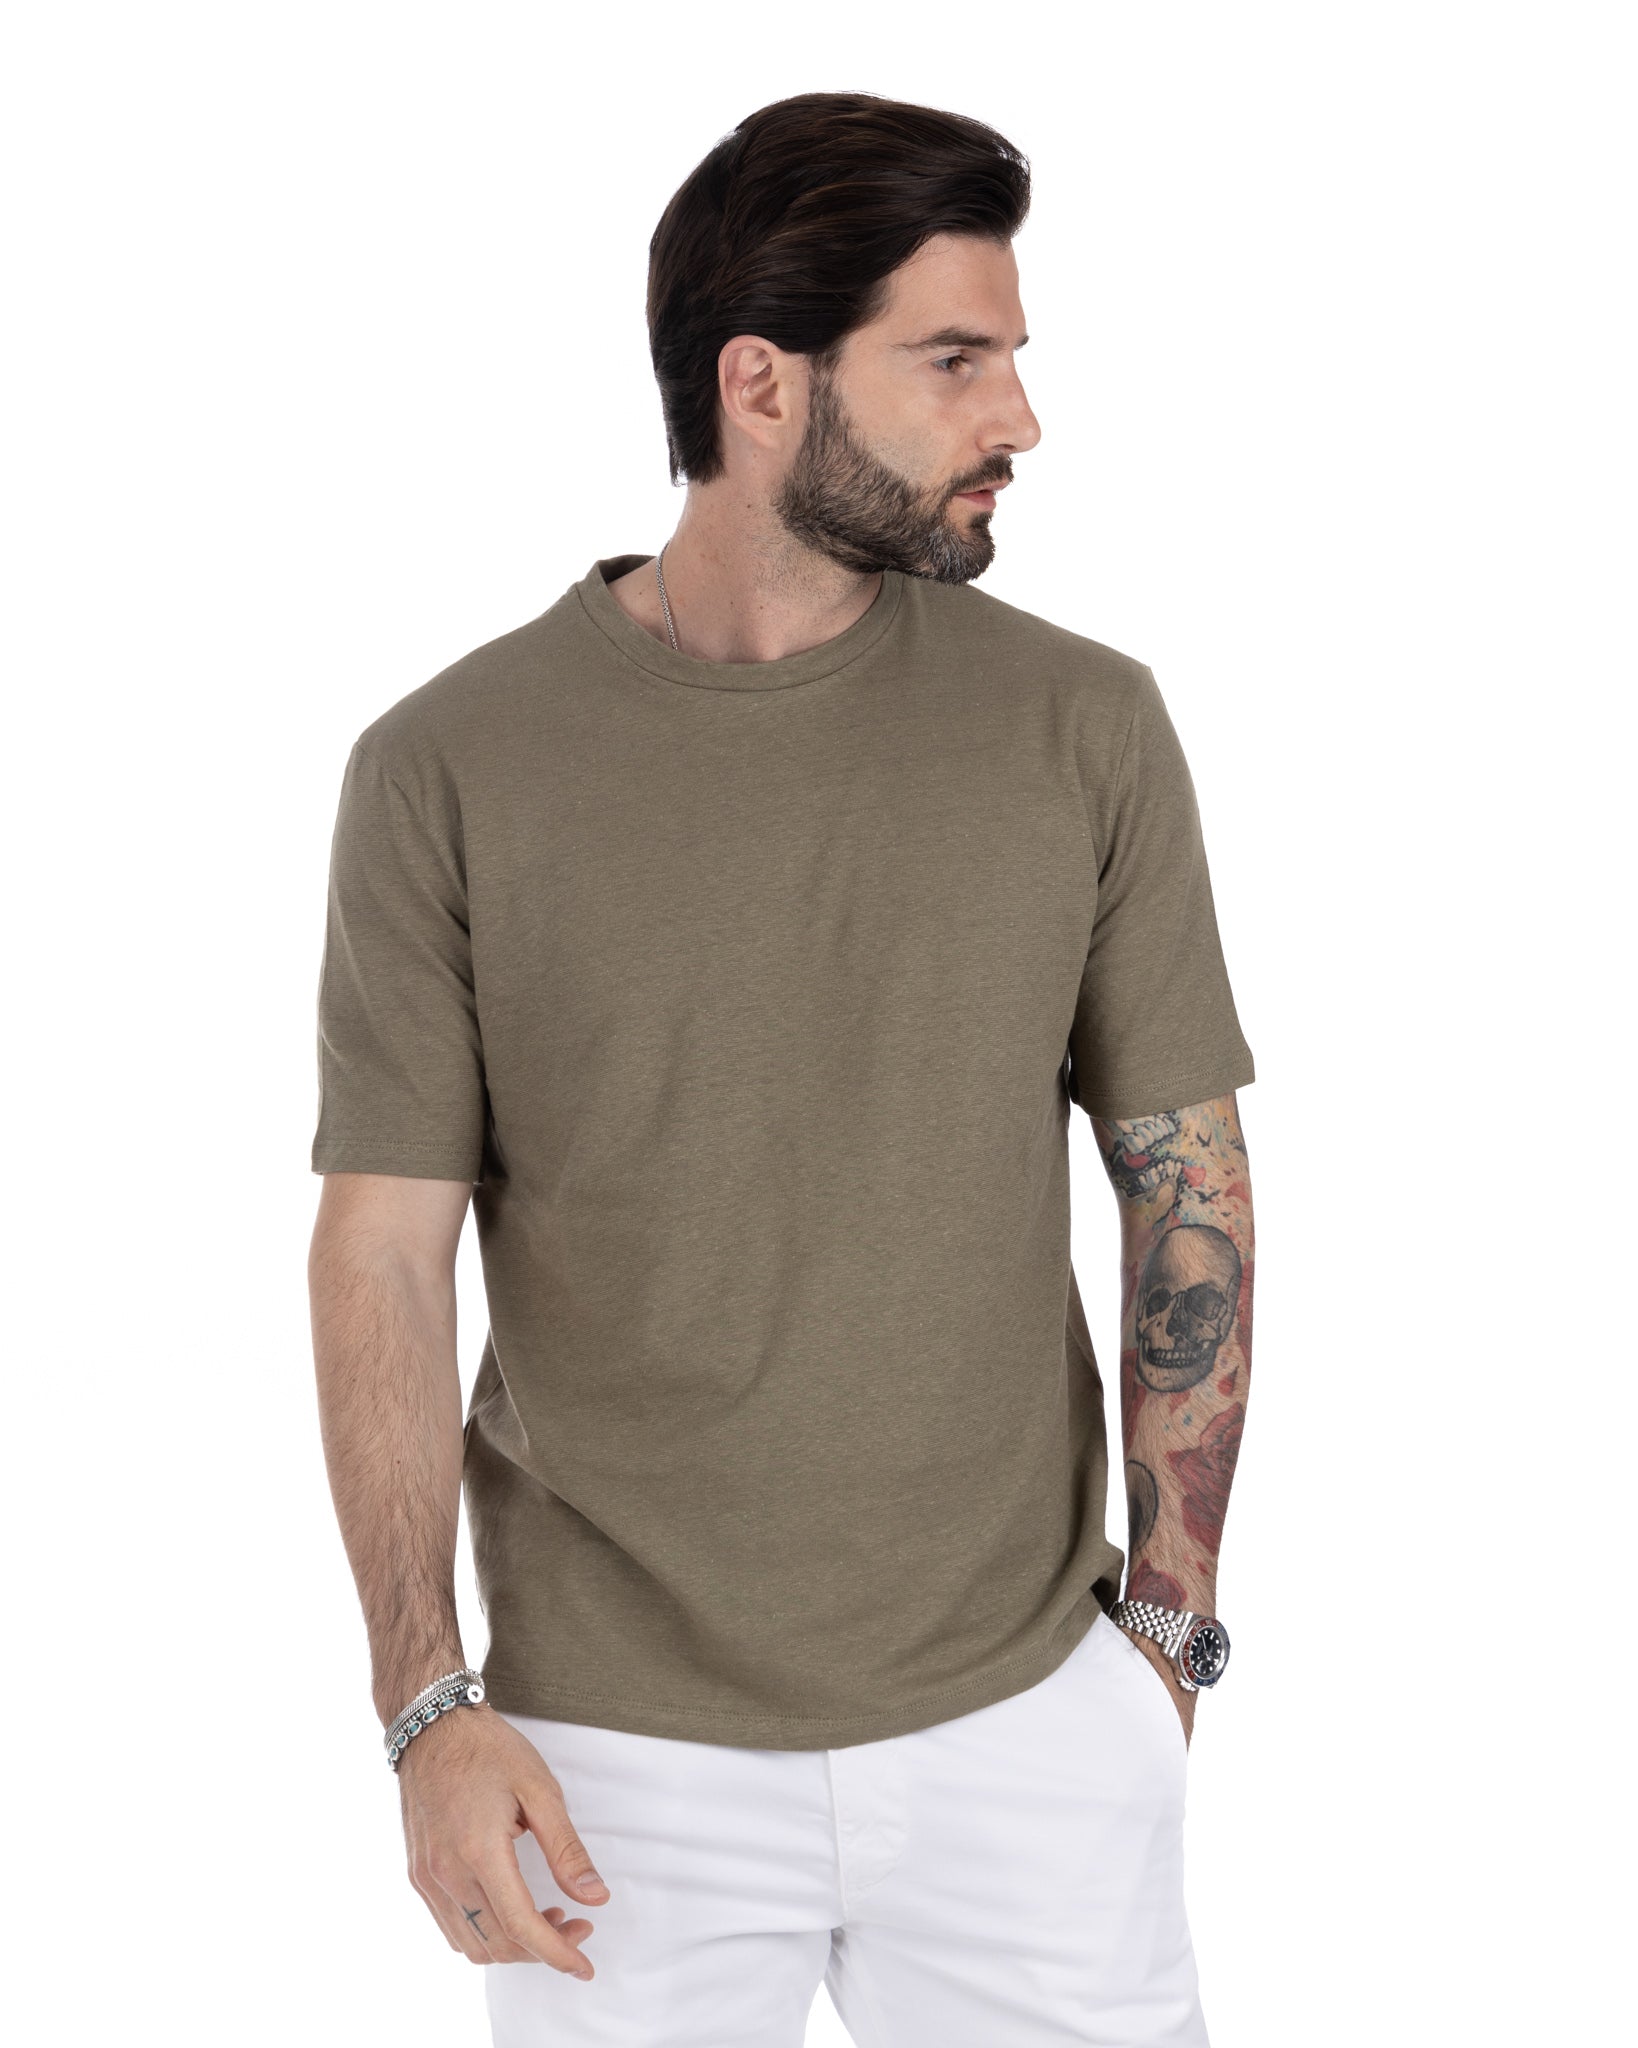 Favignana - t-shirt militaire en lin